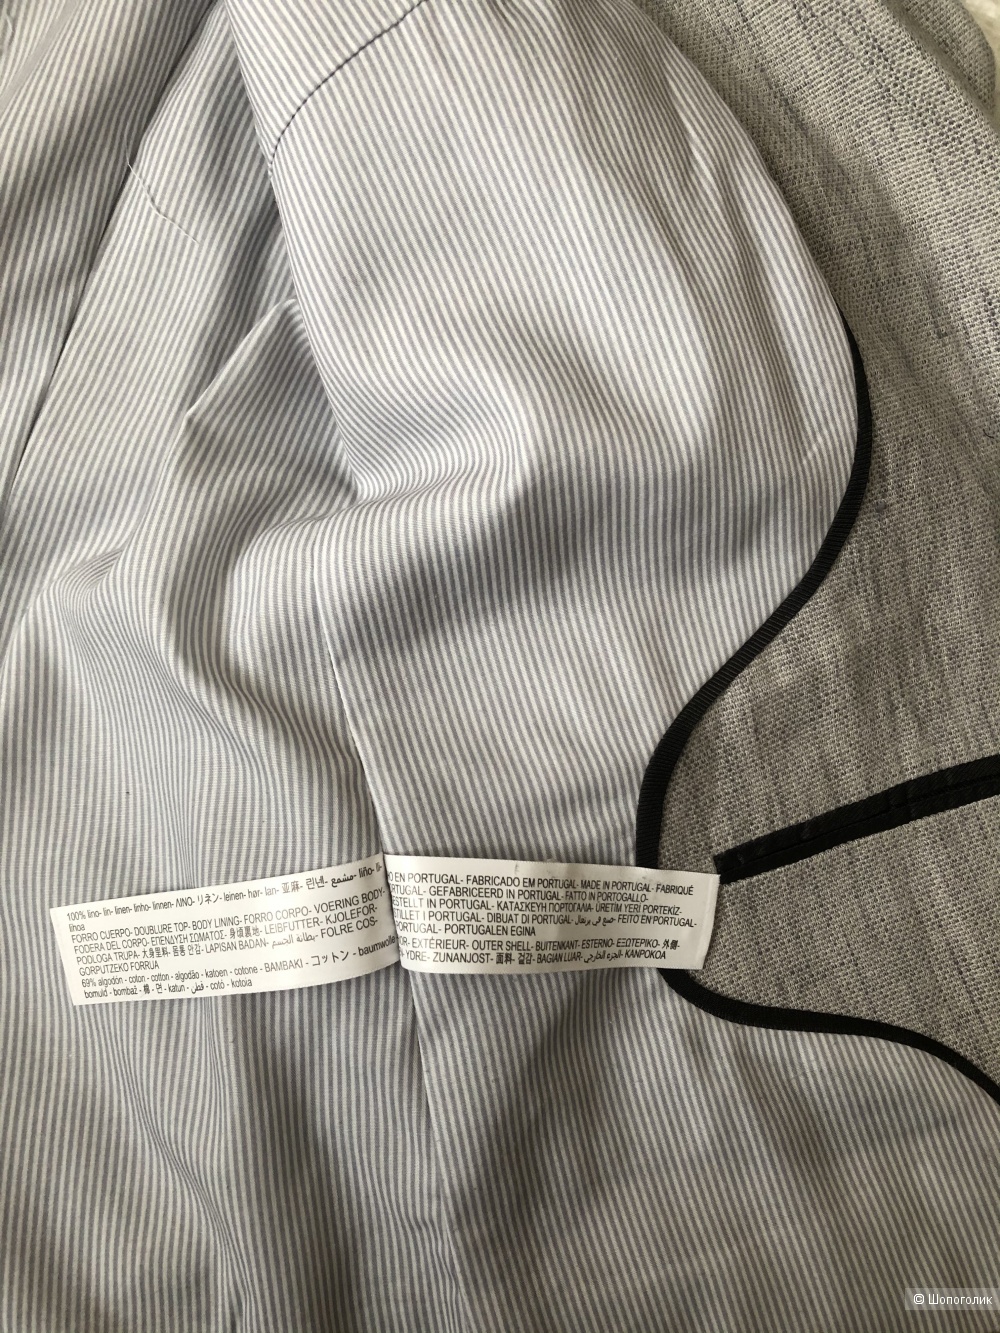 Пиджак Massimo Dutti,M(44) размер.